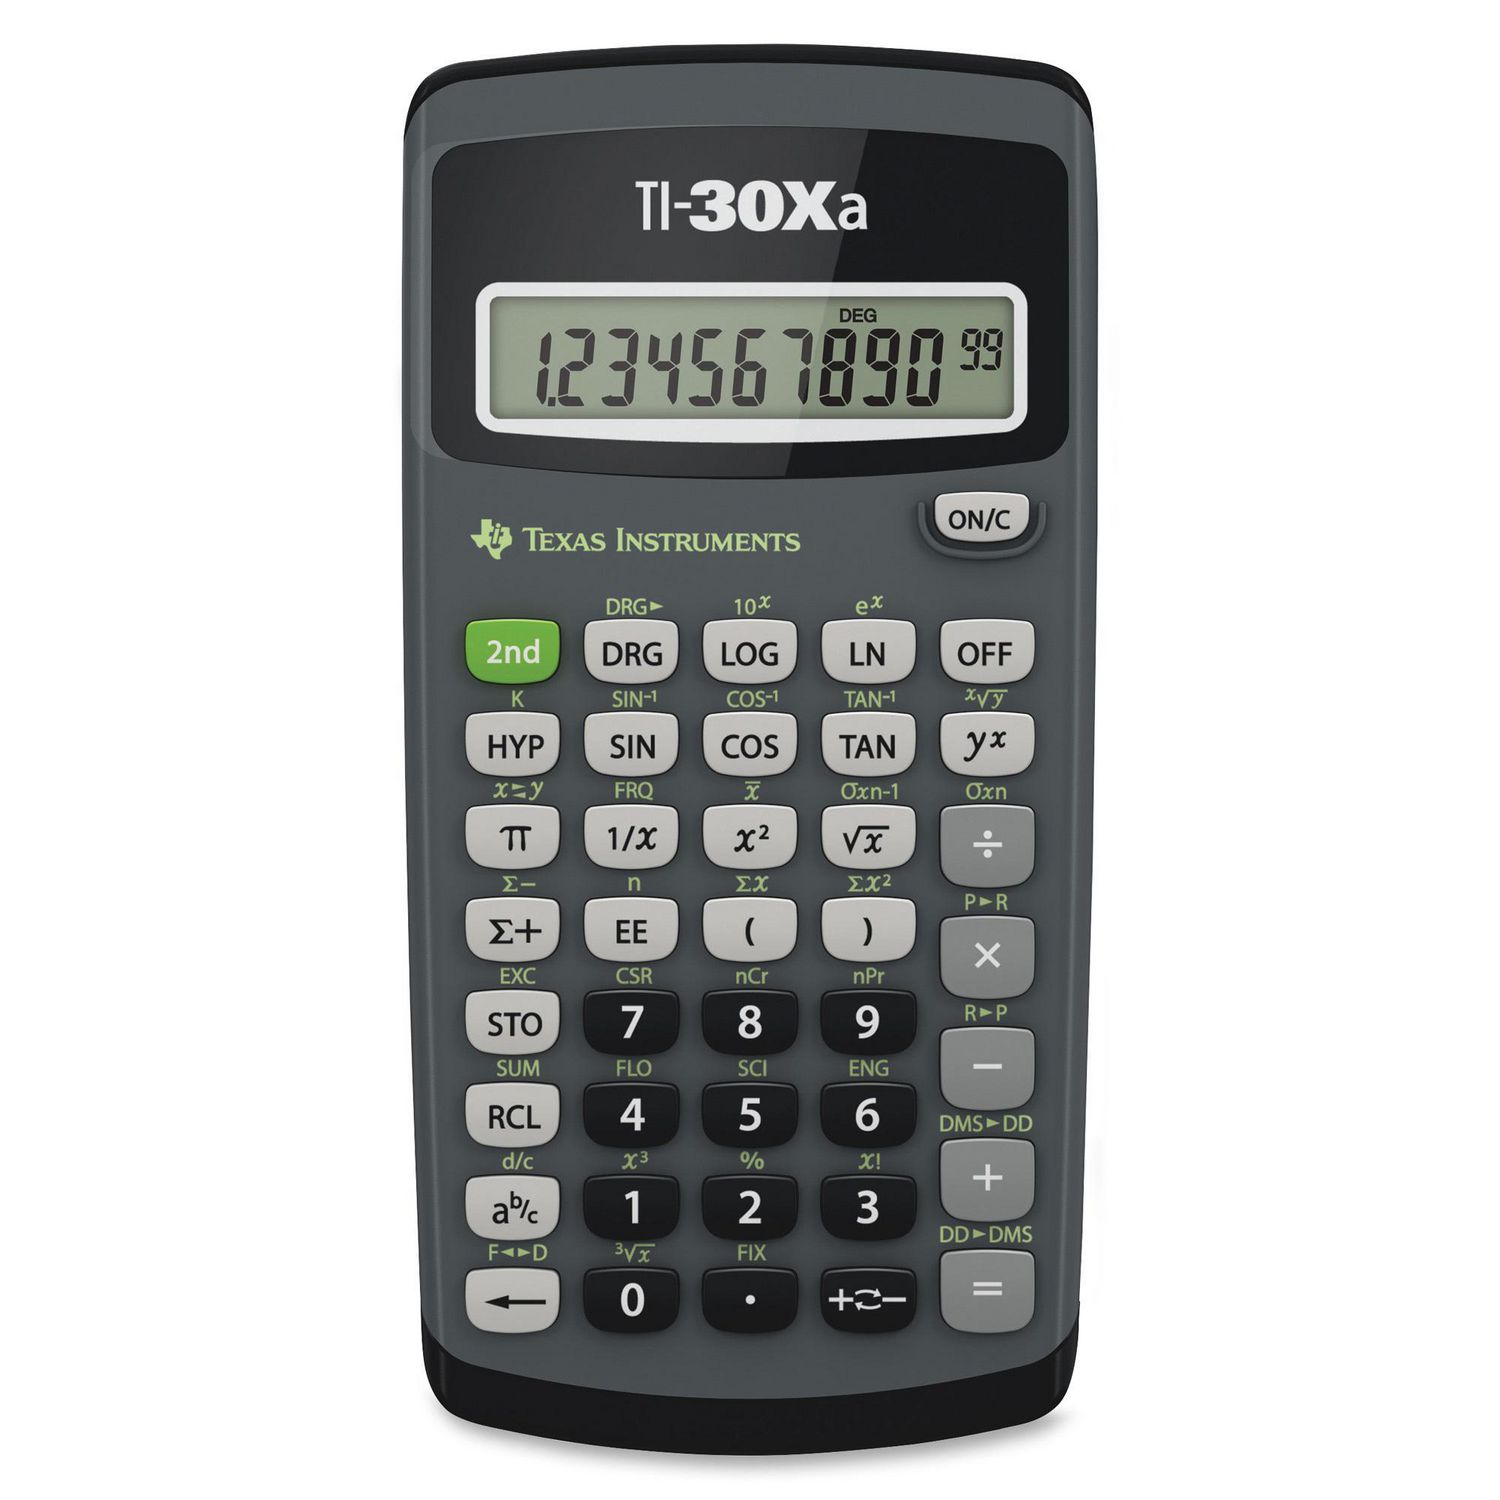 Instruction Book Texas Instruments TI-30Xa Scientific Calculator Manual Guide